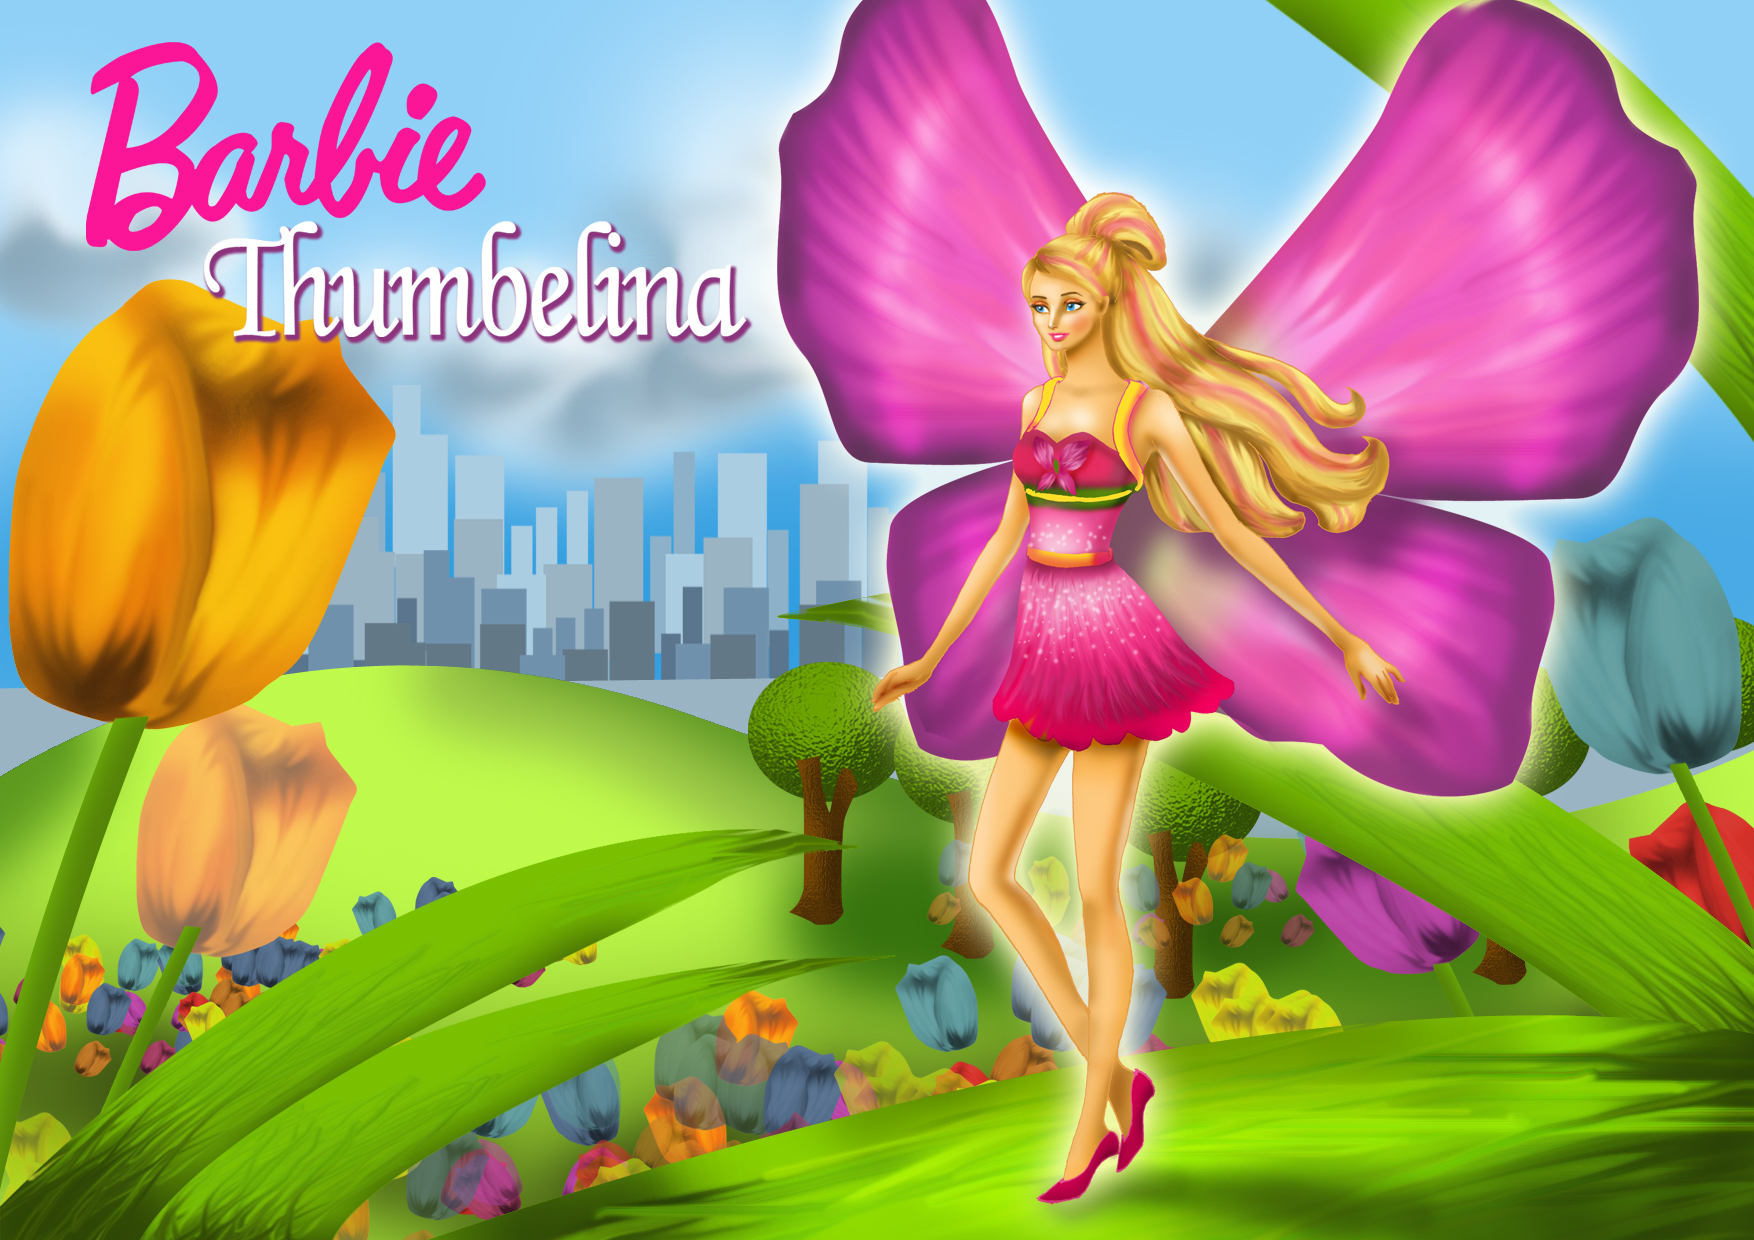 Barbie Movies Image Thumbelina HD Wallpaper And